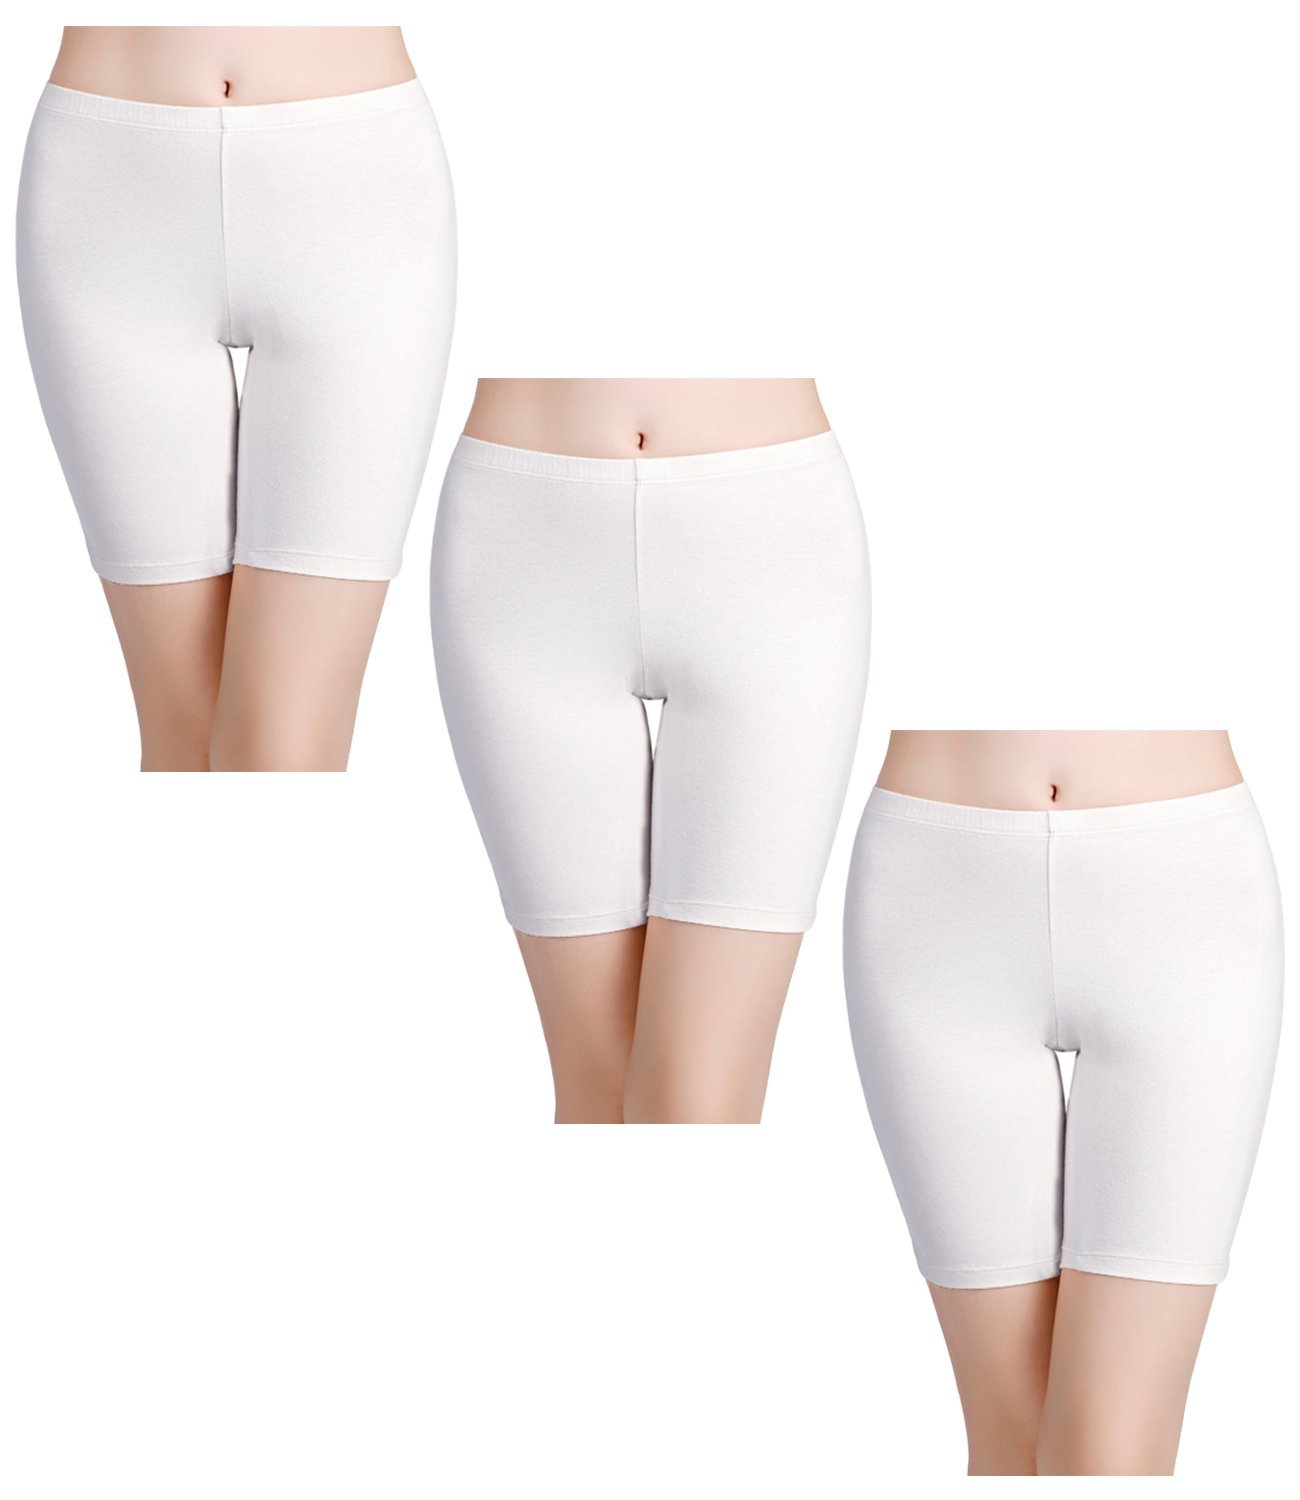 wirarpa Womens Cotton Boy Shorts Underwear Anti Chafing Soft Biker Short  Plus Boy Shorts Panties 4 Pack